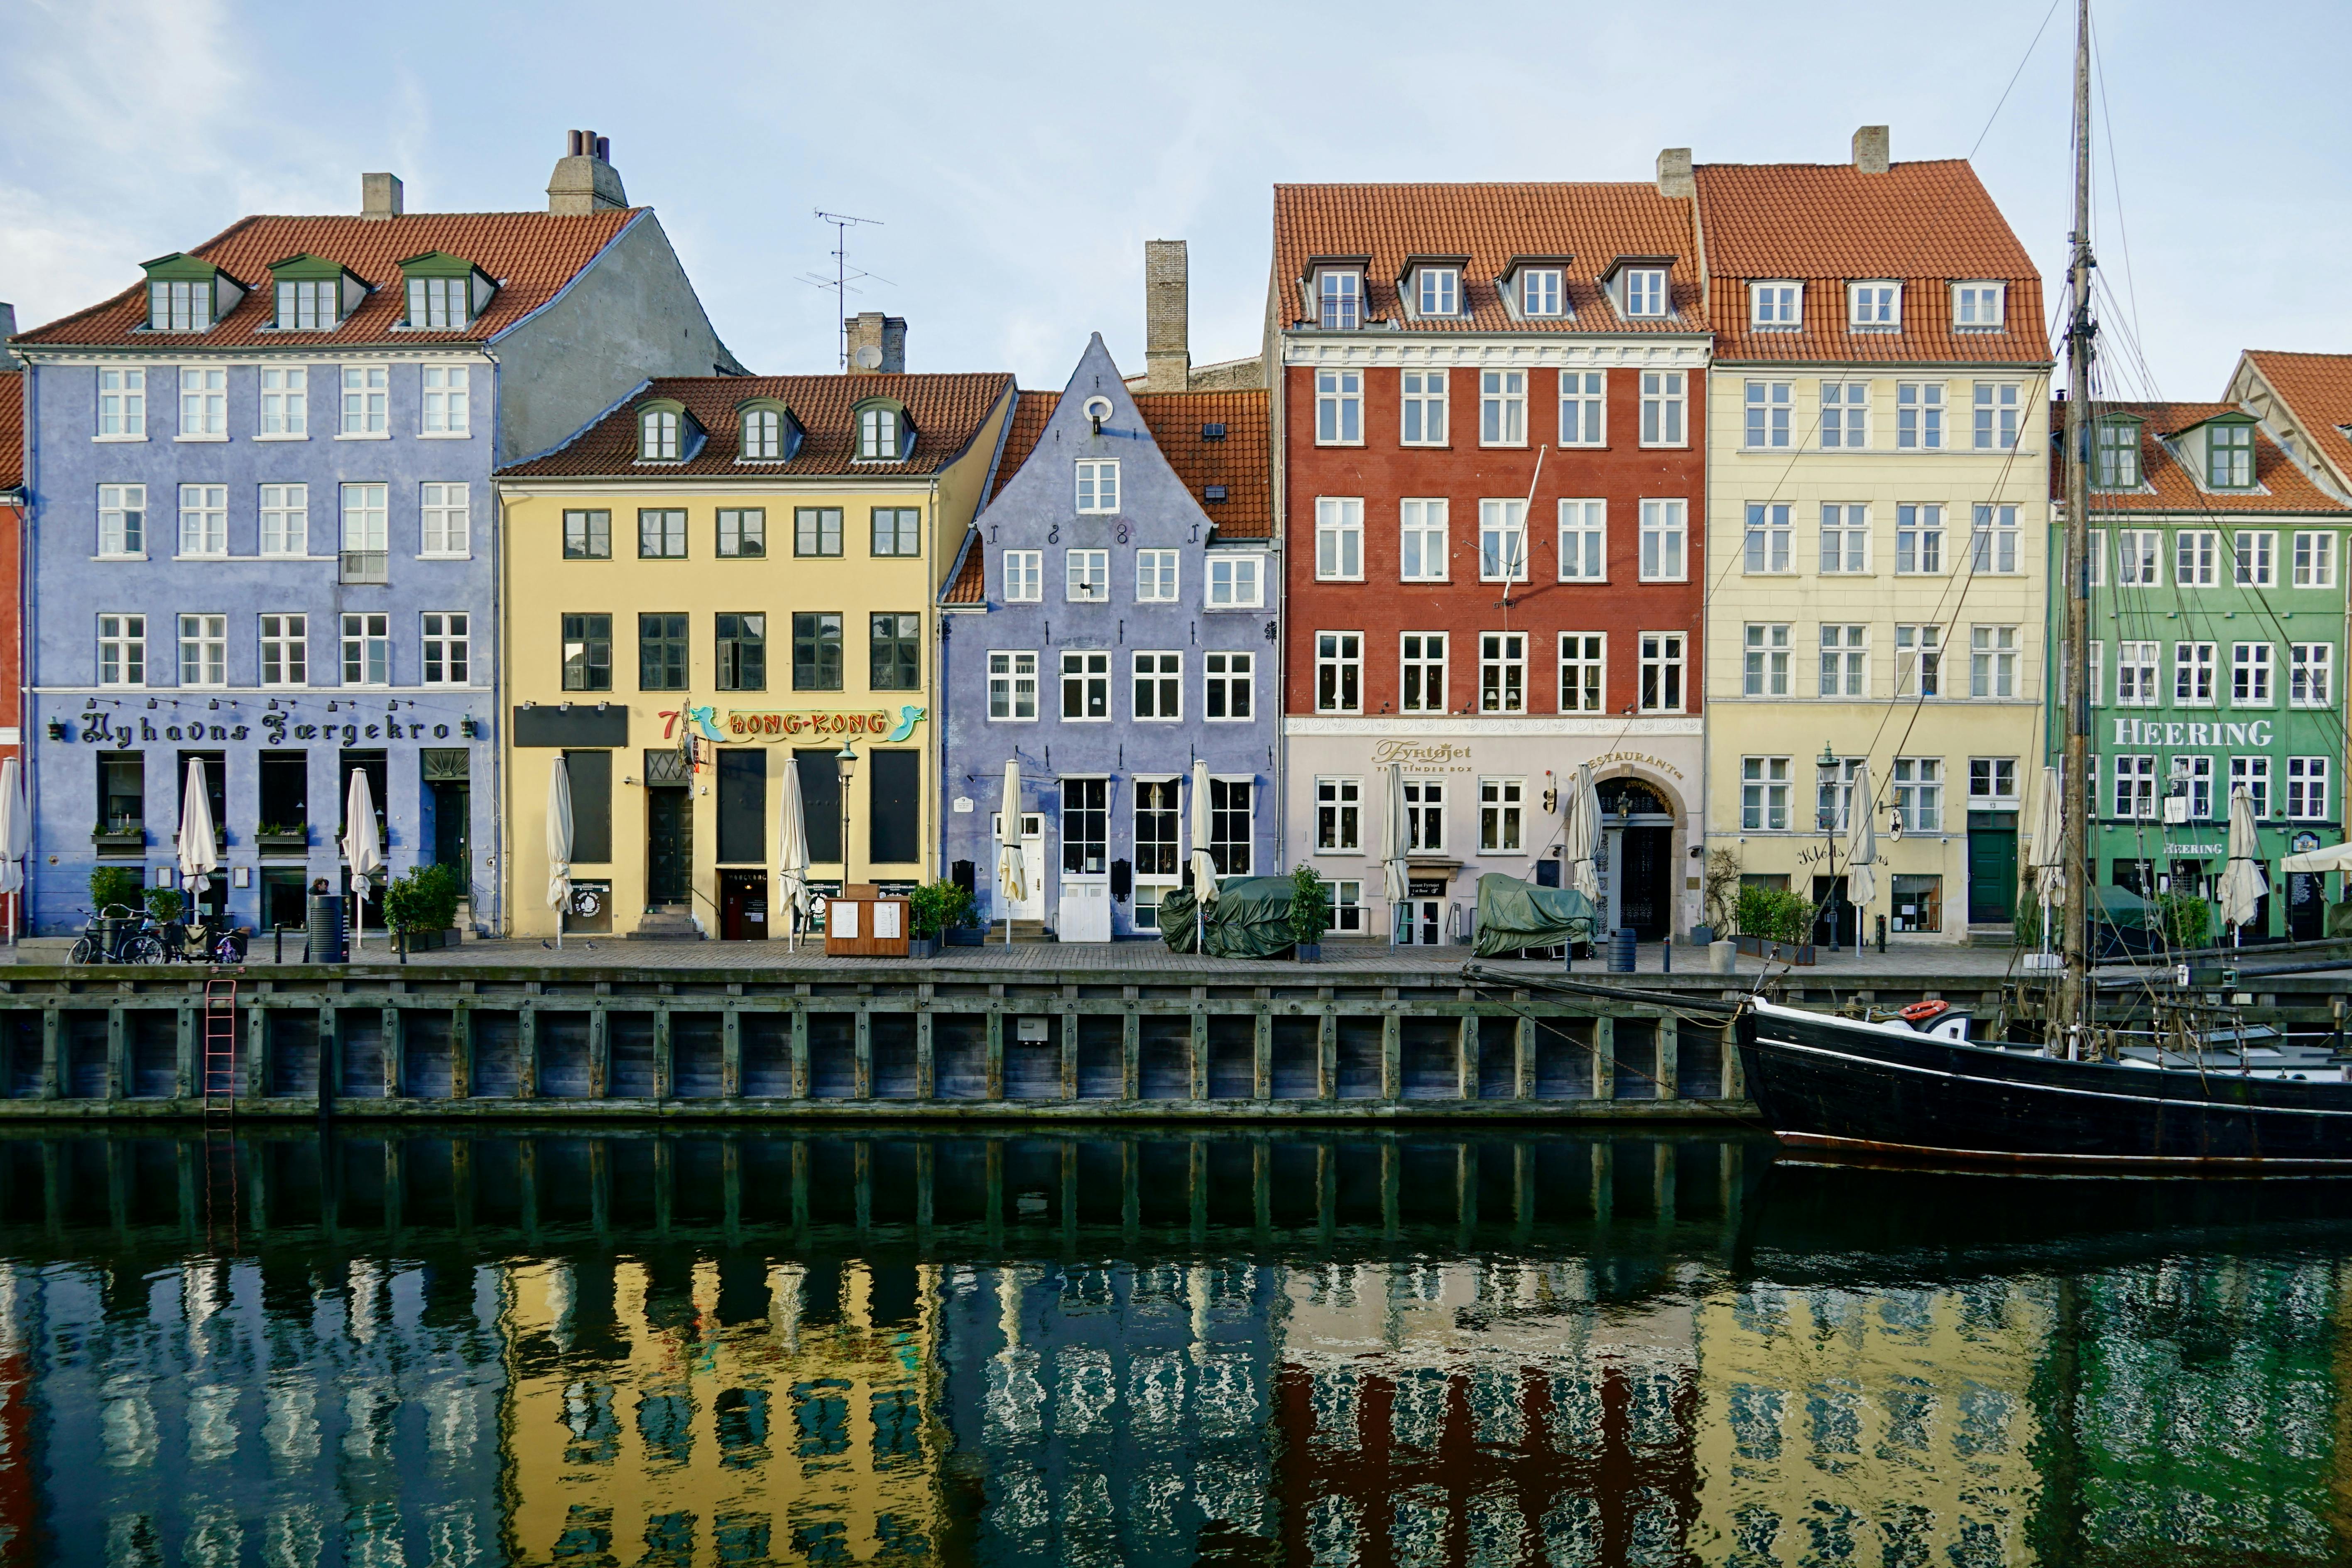 The heist in Nyhavn mystery adventure